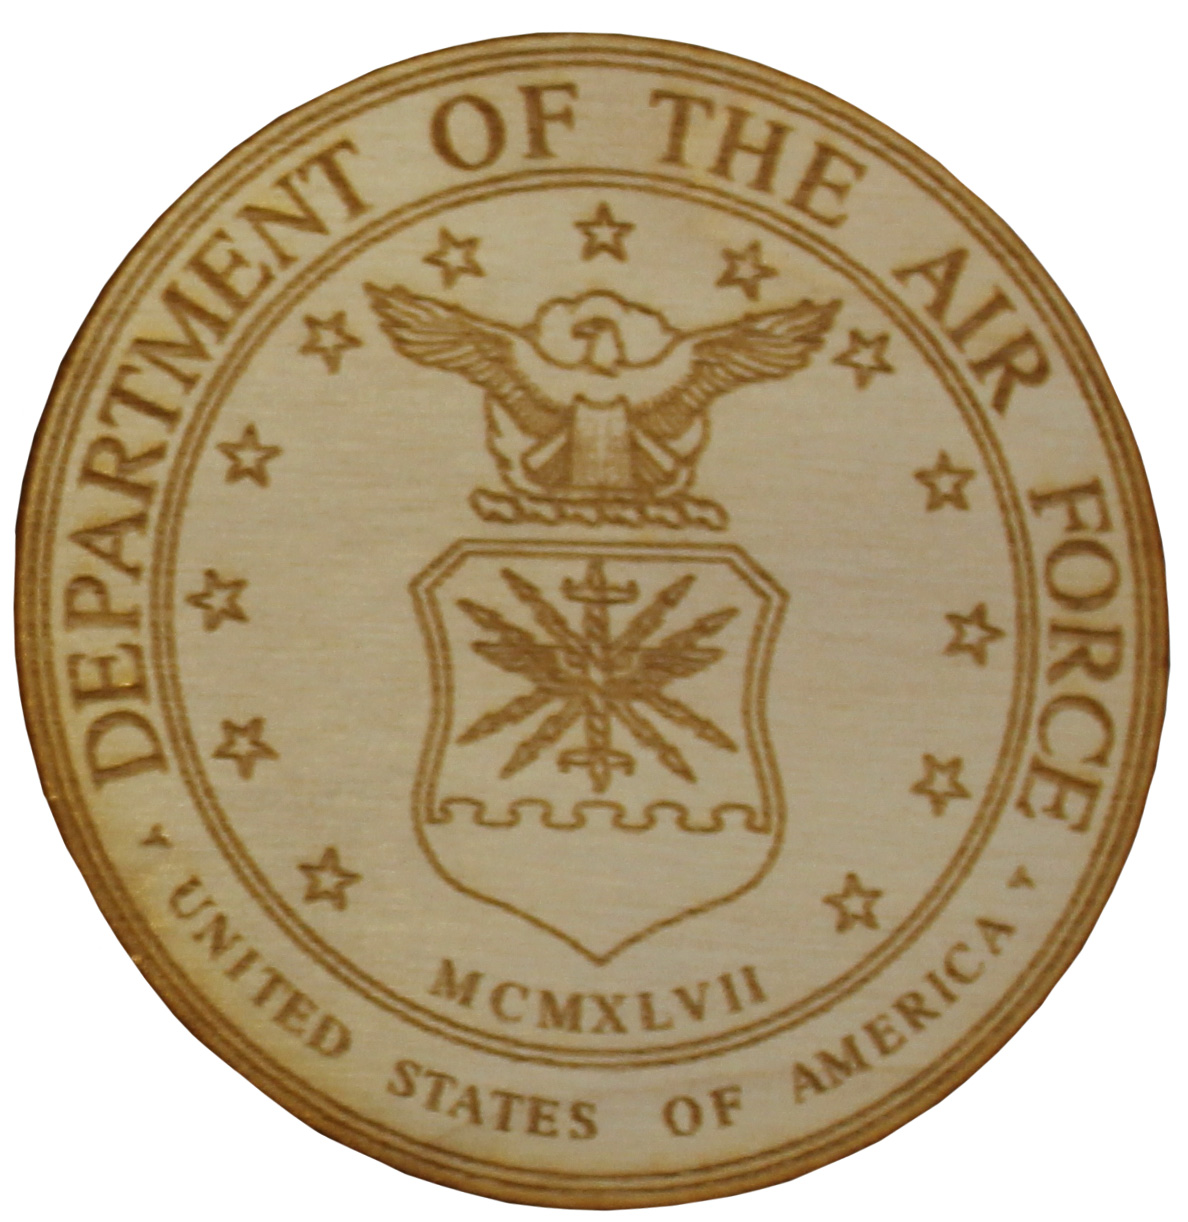 US Air Force Insignia